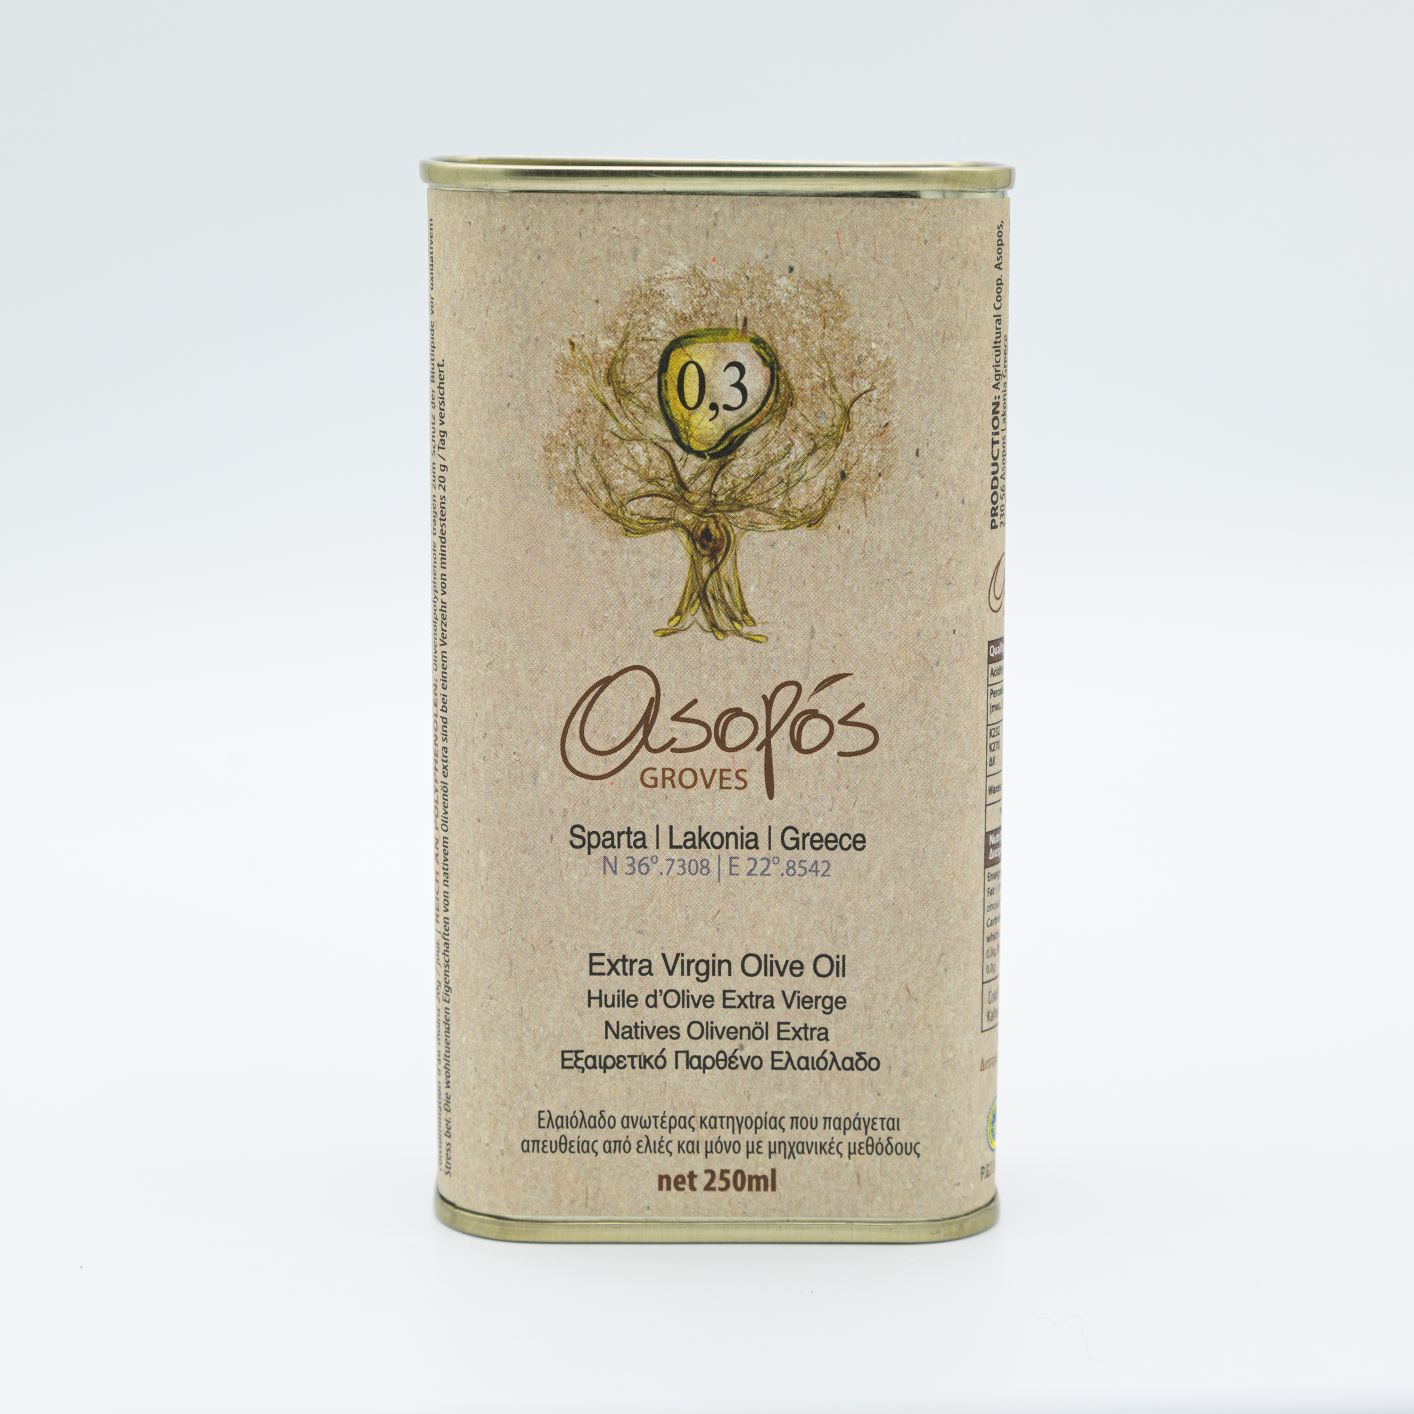 Asopos Groves Extra Virgin Olive Oil 250ml tin